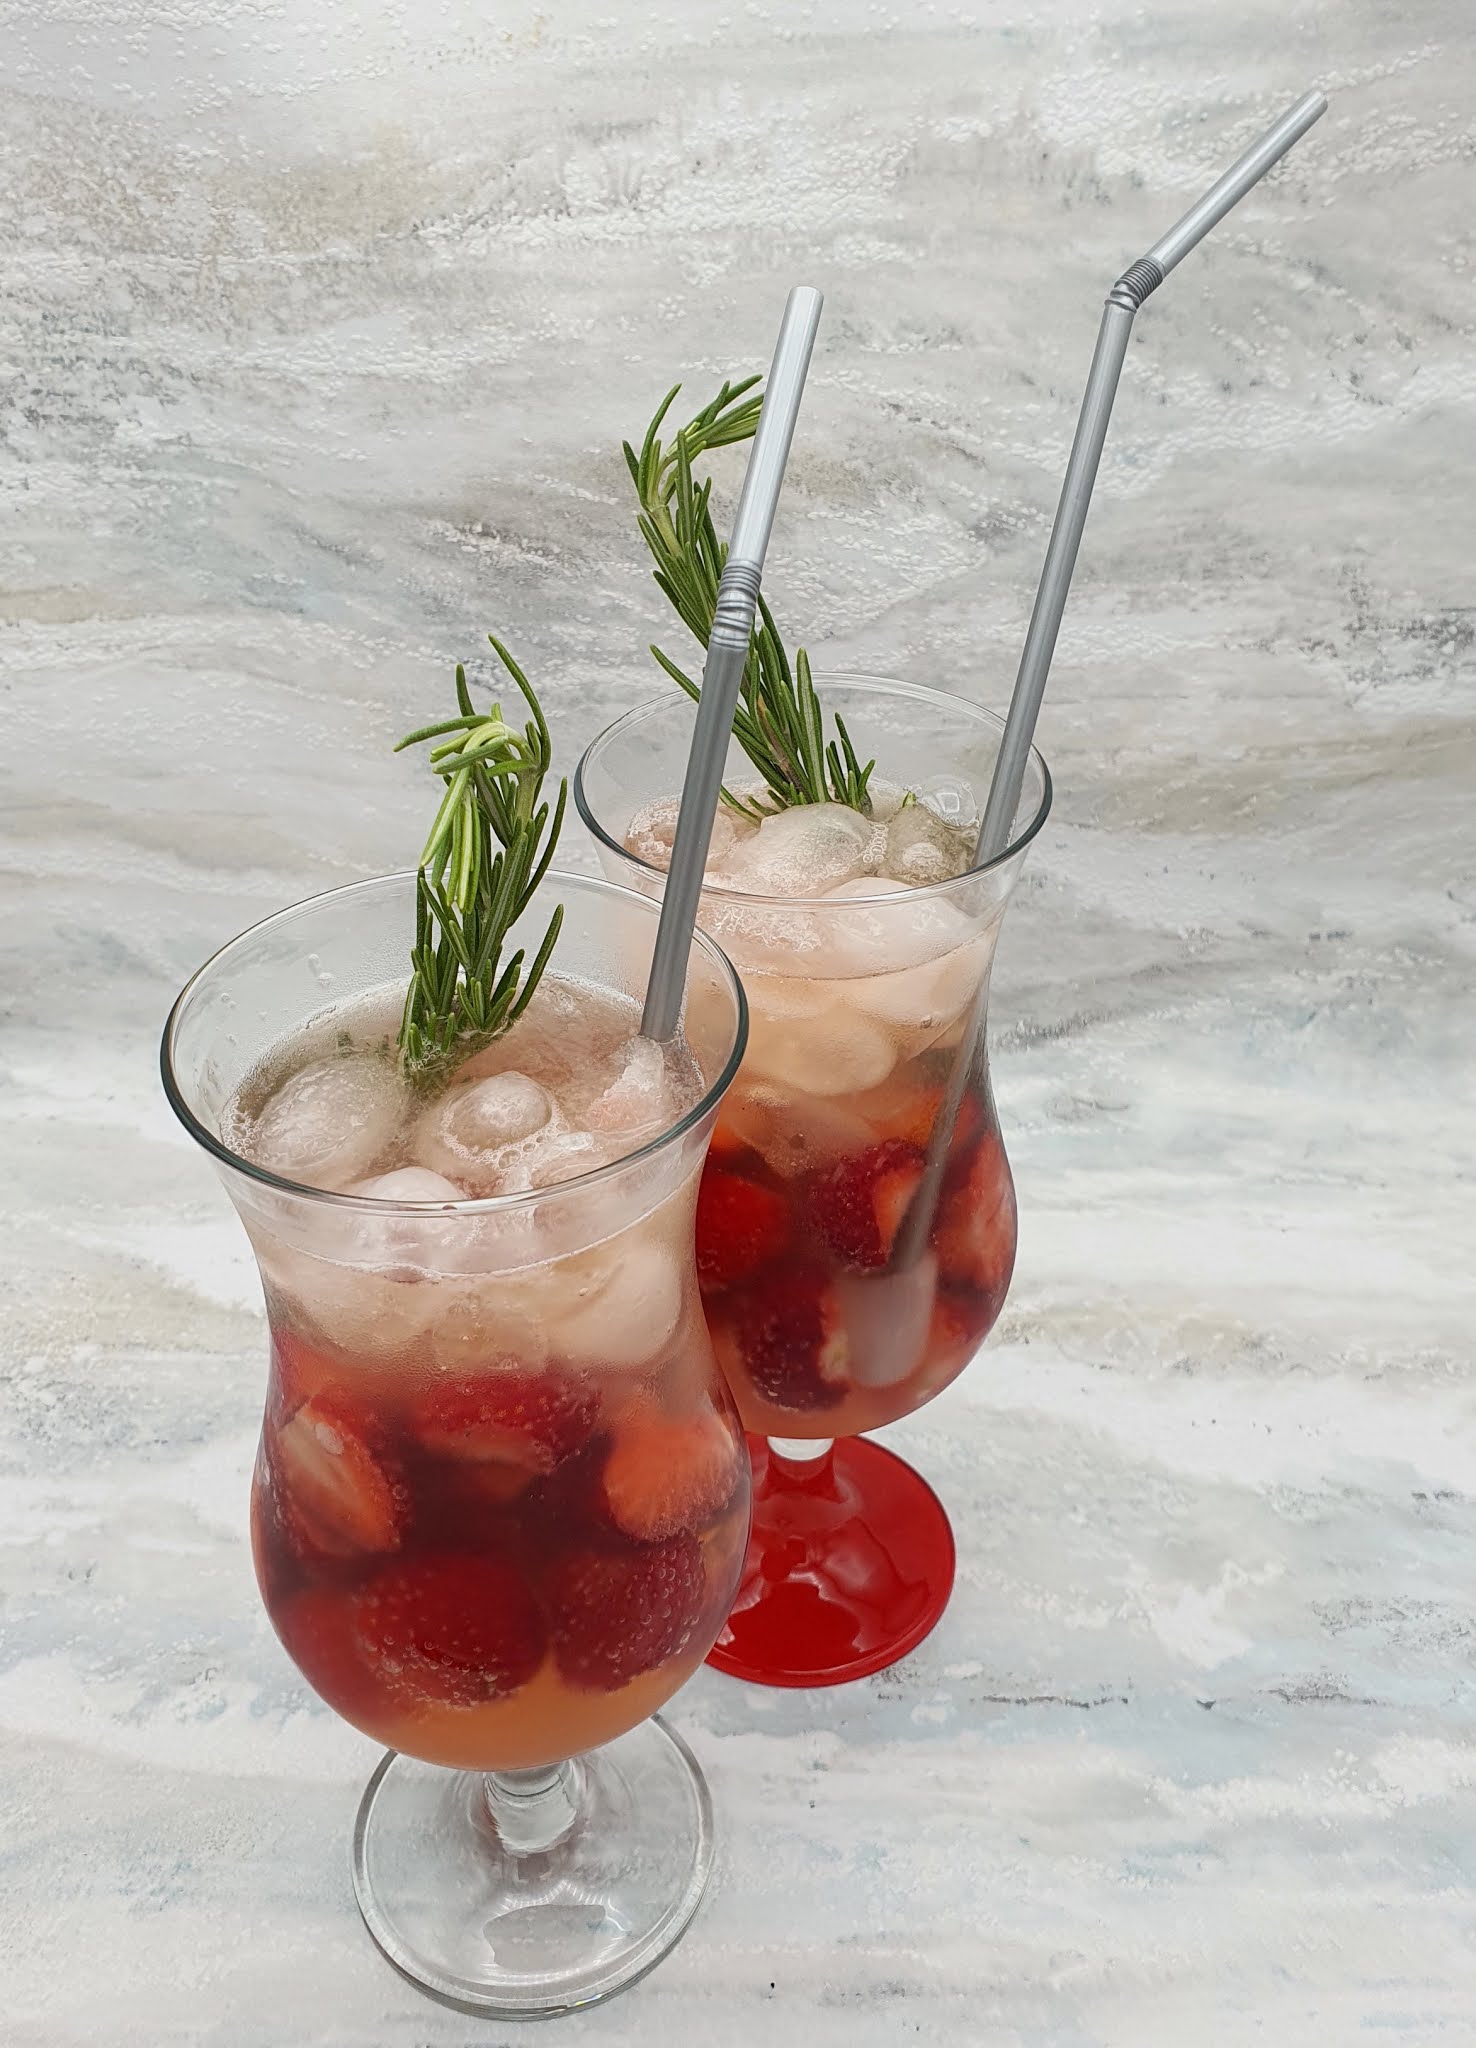 Wessels low carb Welt: Erdbeer-Rosmarin Cocktail mit Gin